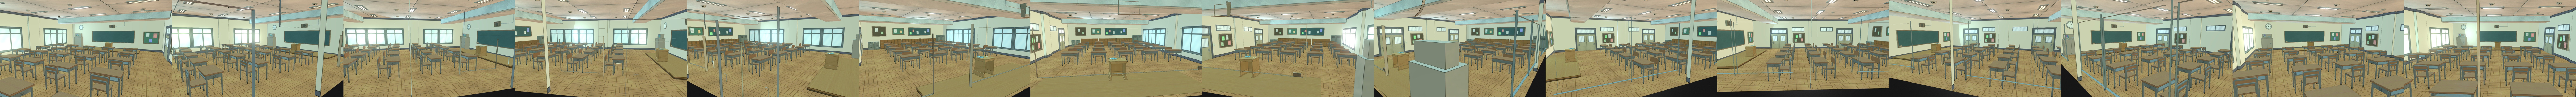 Anime Classroom - Buy Royalty Free 3D model by fangzhangmnm (@fangzhangmnm)  [3f49271]